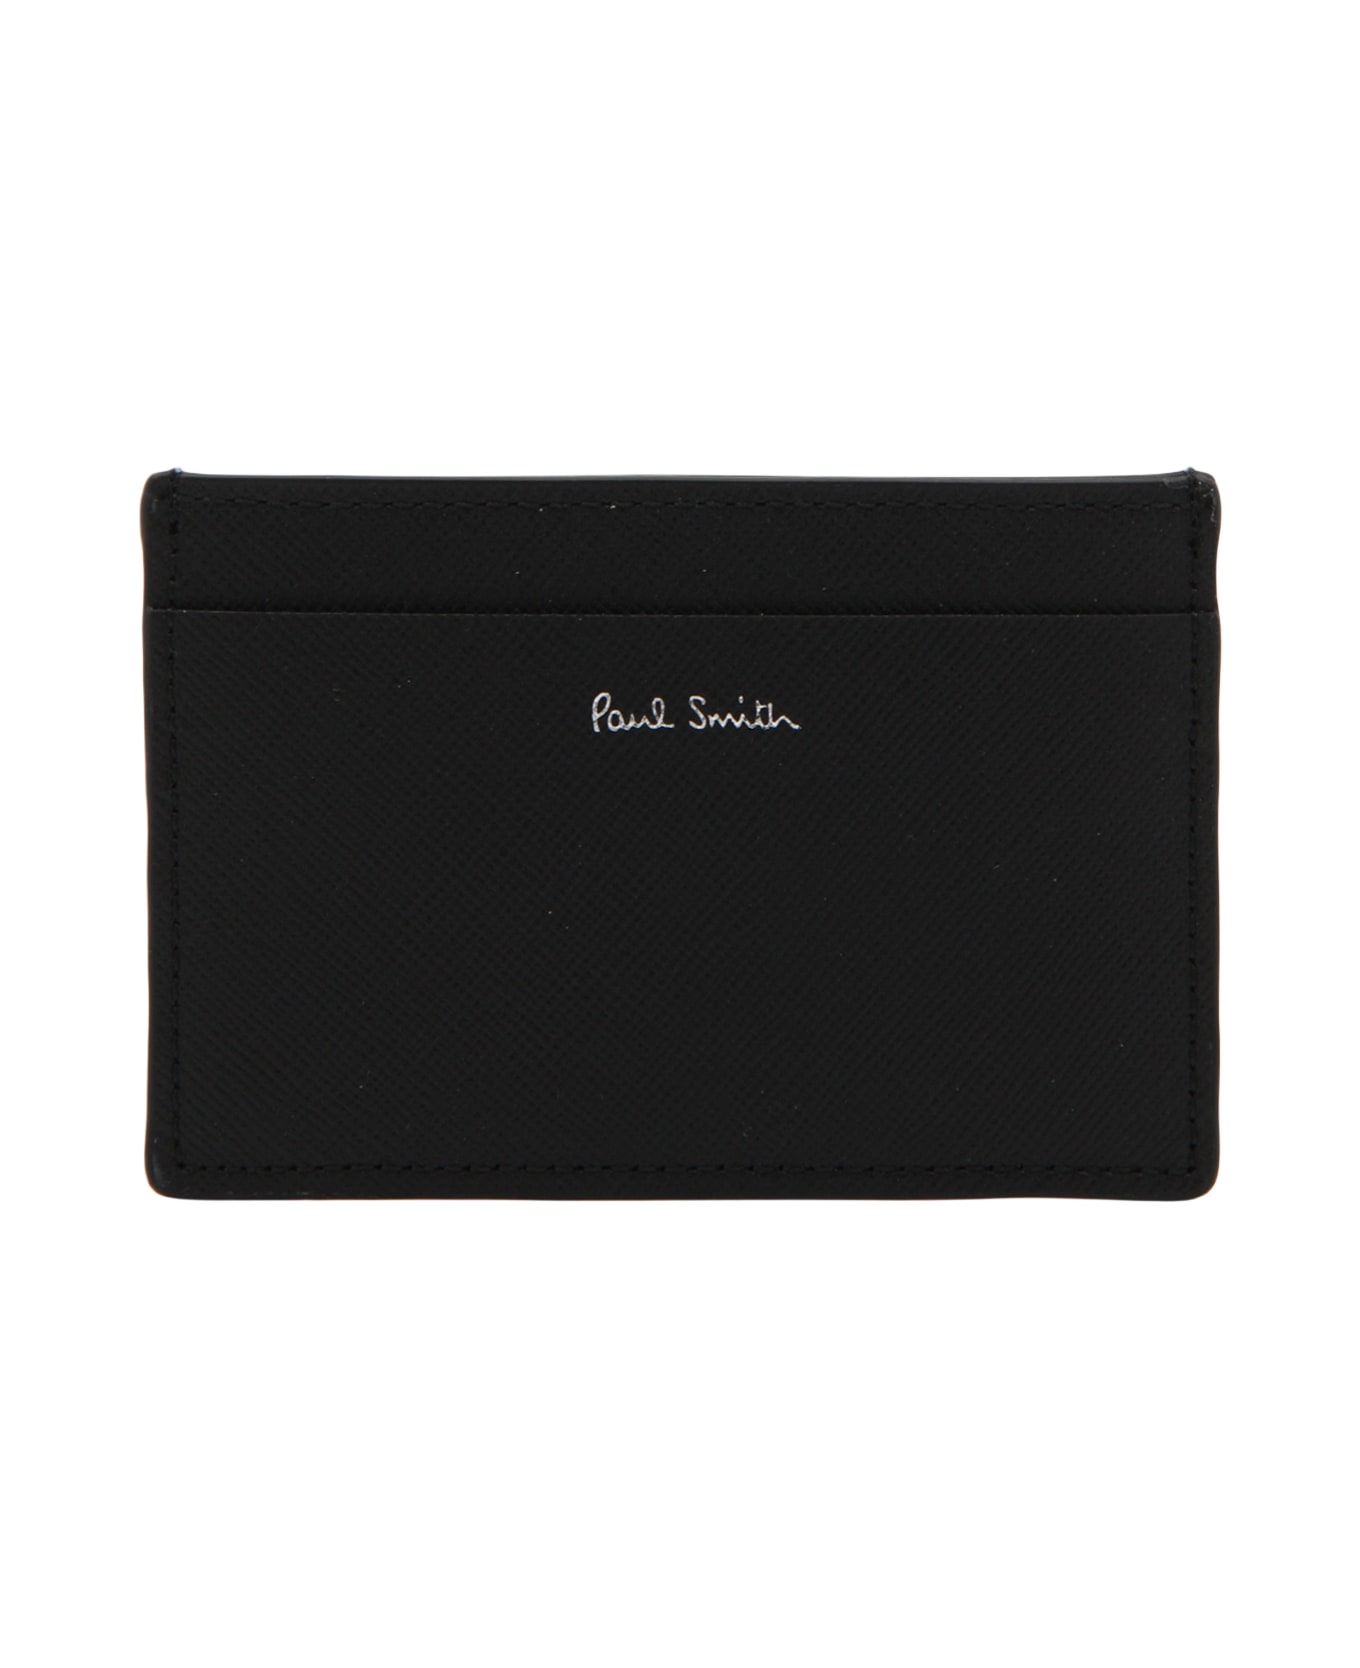 Paul Smith Black Multicolour Leather Cardholder - Black 財布